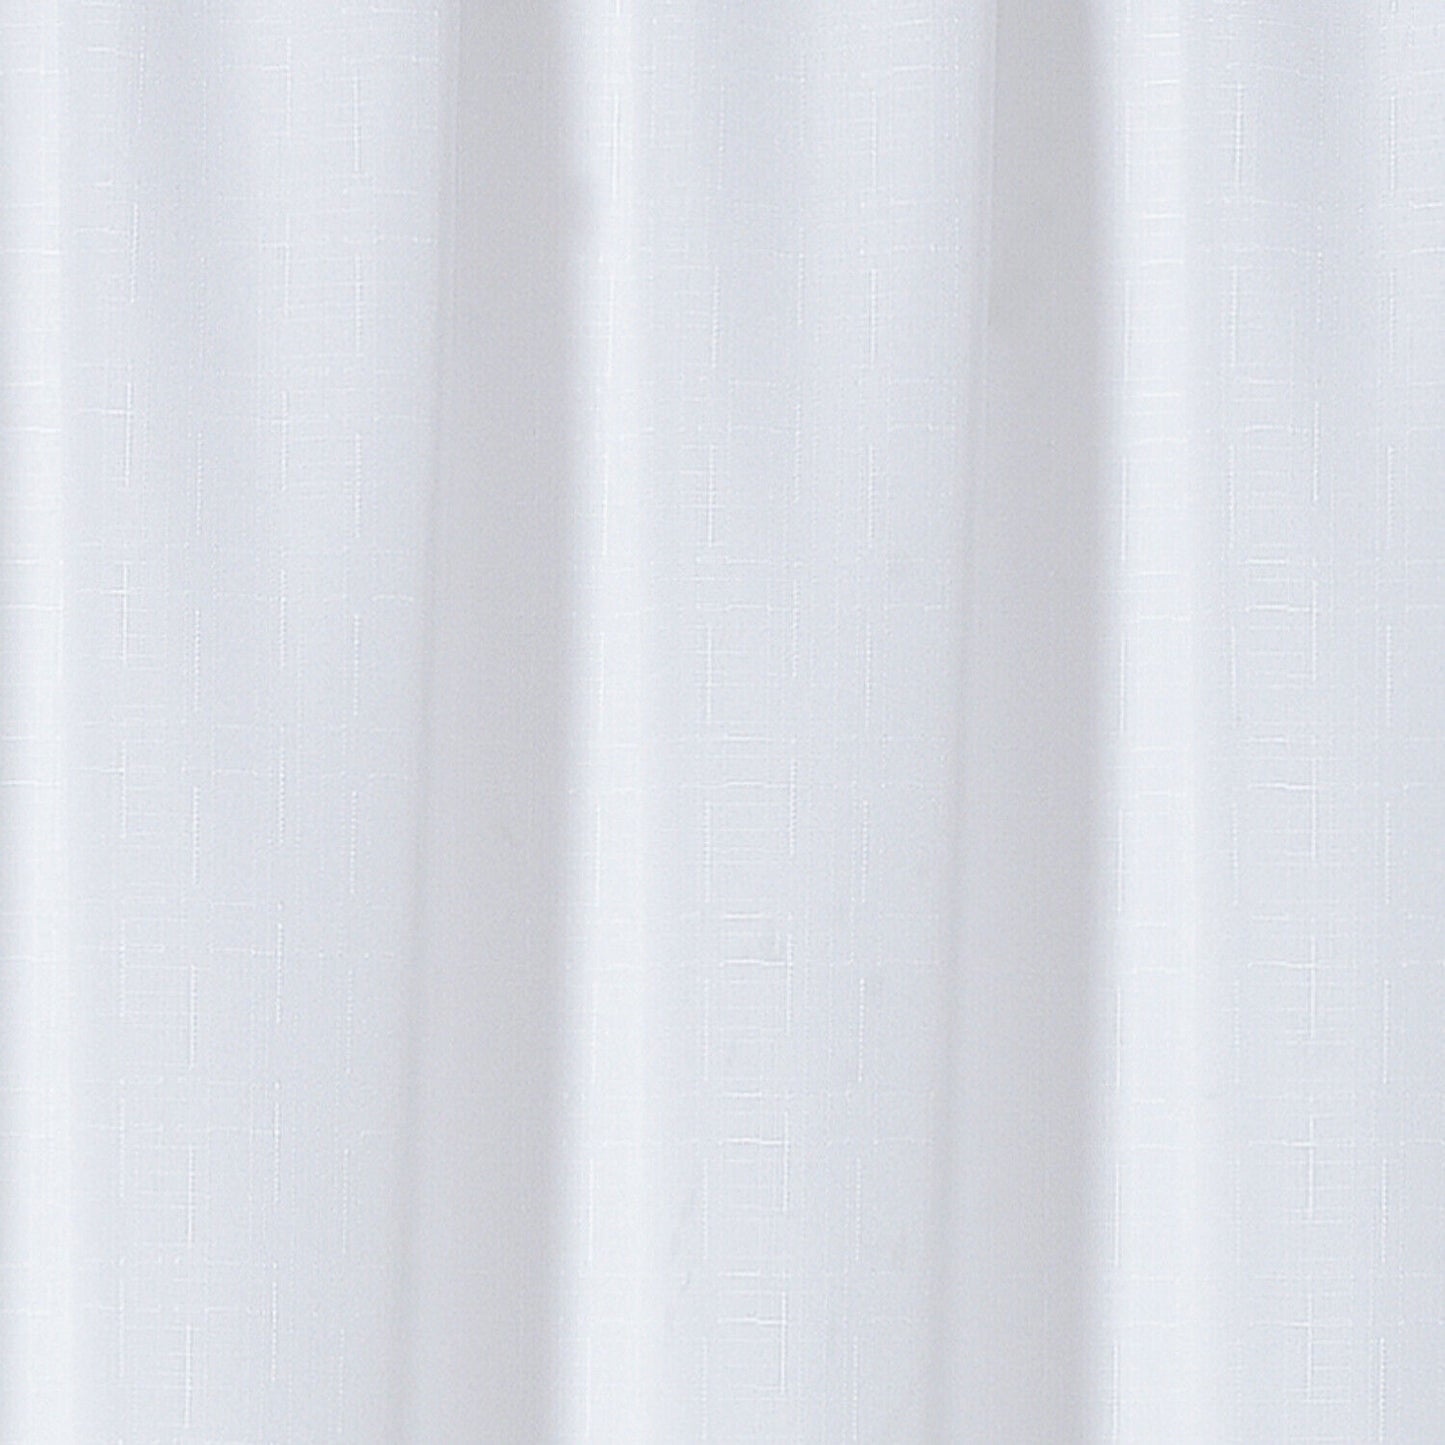 Linen Look Voile 59" x 90" White Window Curtain Drapes Textured Plain Slot Top